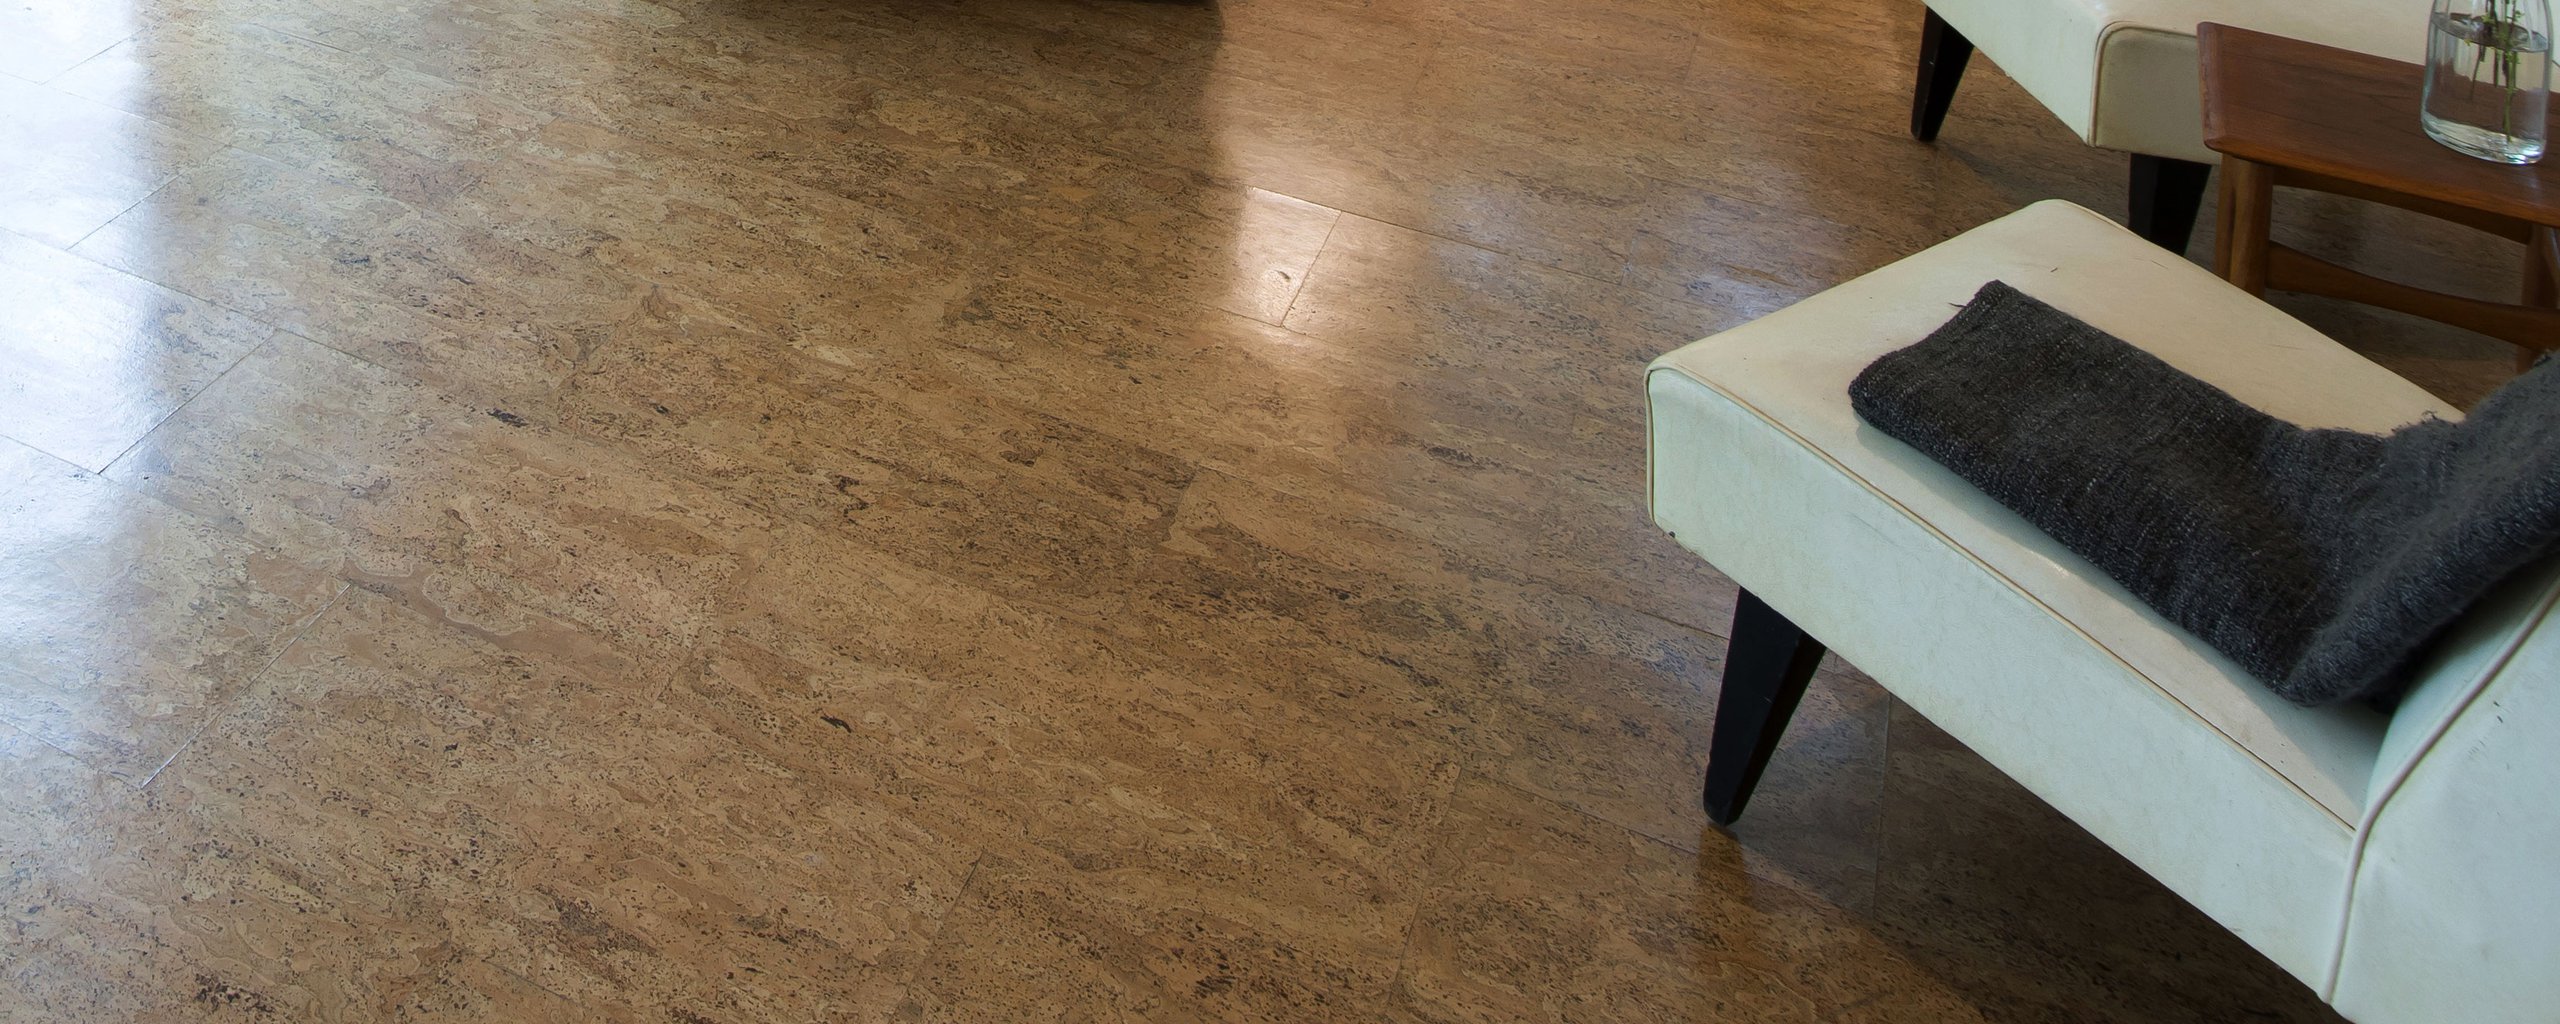 Diy Cork Flooring Pros Cons Green, Can Cork Flooring Be Installed Over Concrete